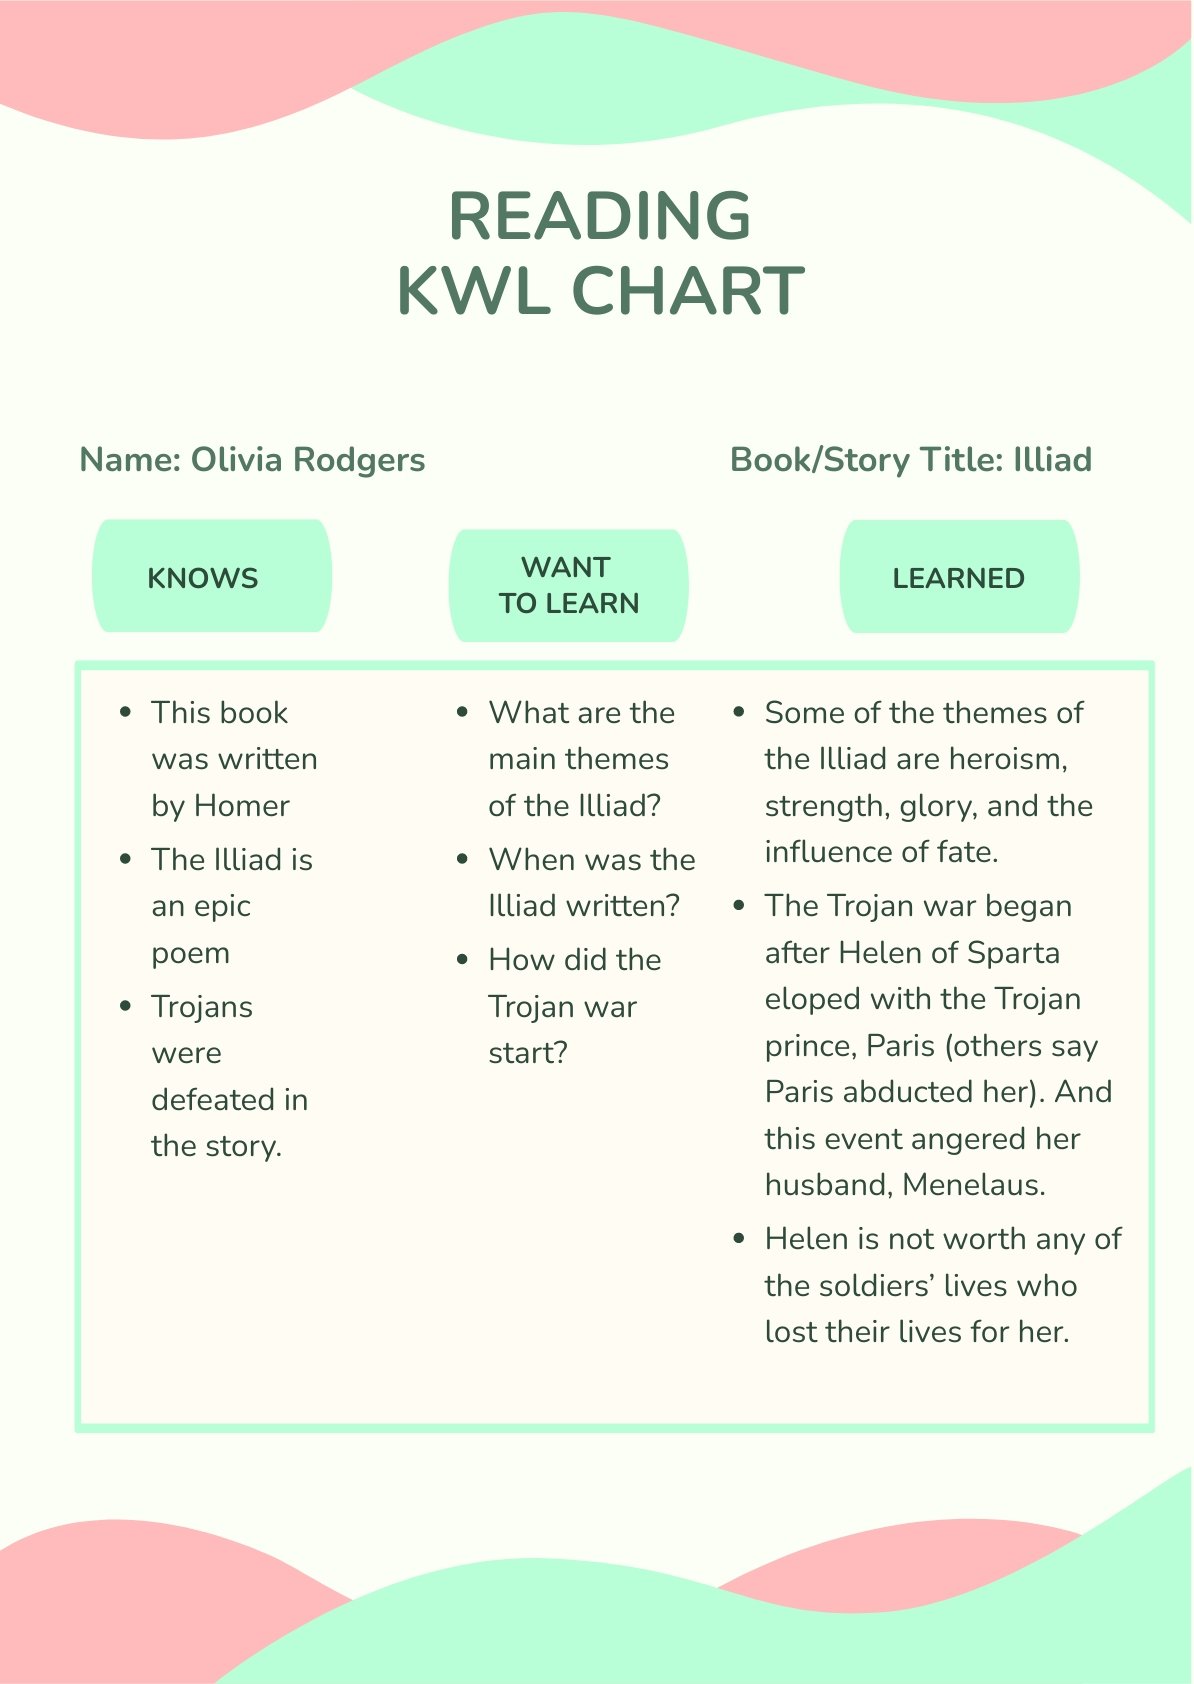 Reading KWL Chart